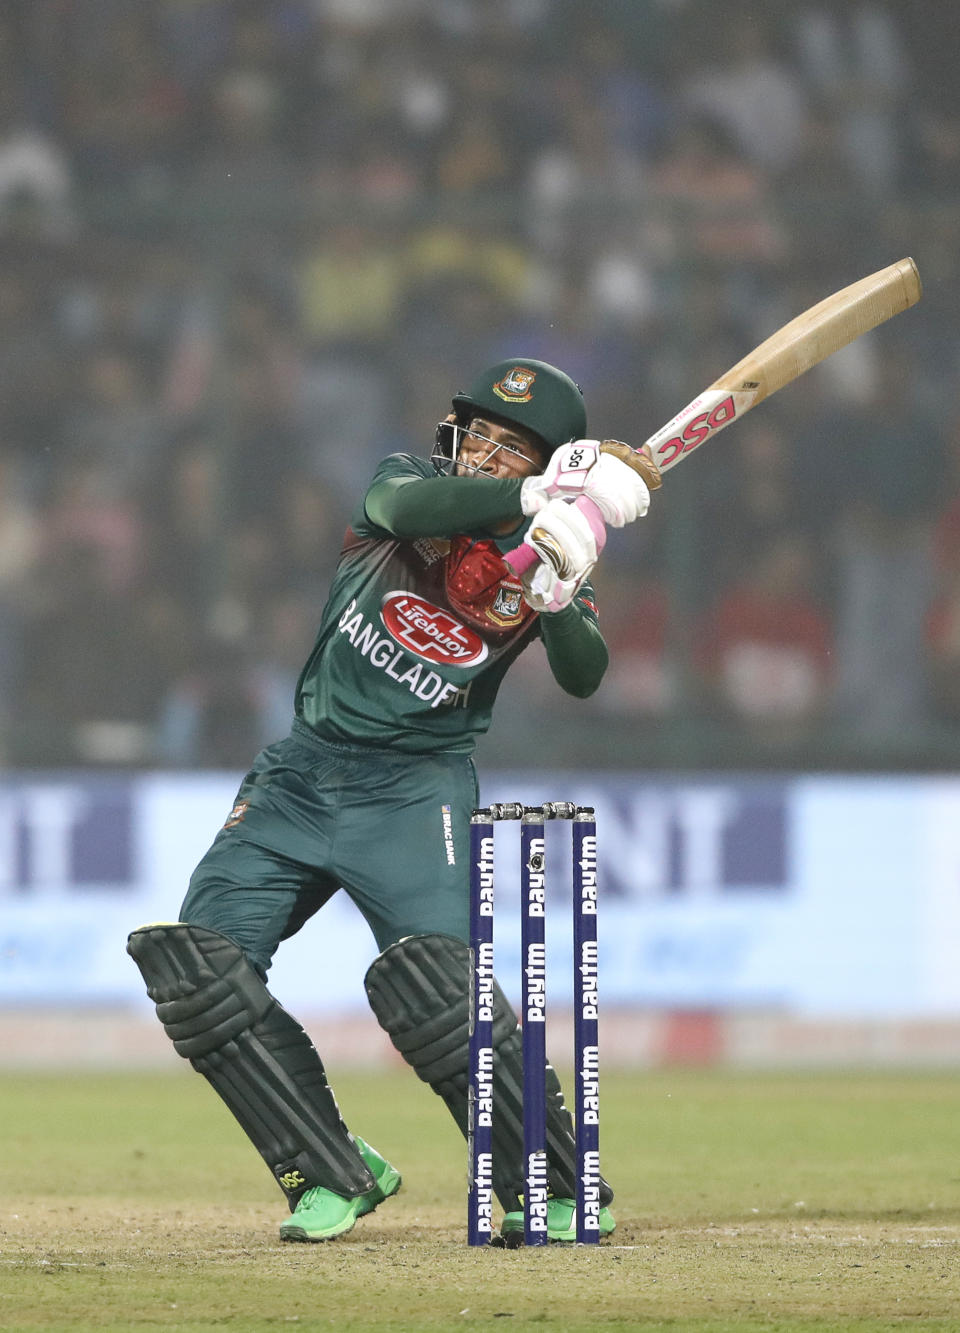 Bangladesh's Bangladesh's Mushfiqur Rahim hits a six against India during the first T20 cricket match at the Arun Jaitley stadium, in New Delhi, India, Sunday, Nov. 3, 2019. (AP Photo/Manish Swarup)